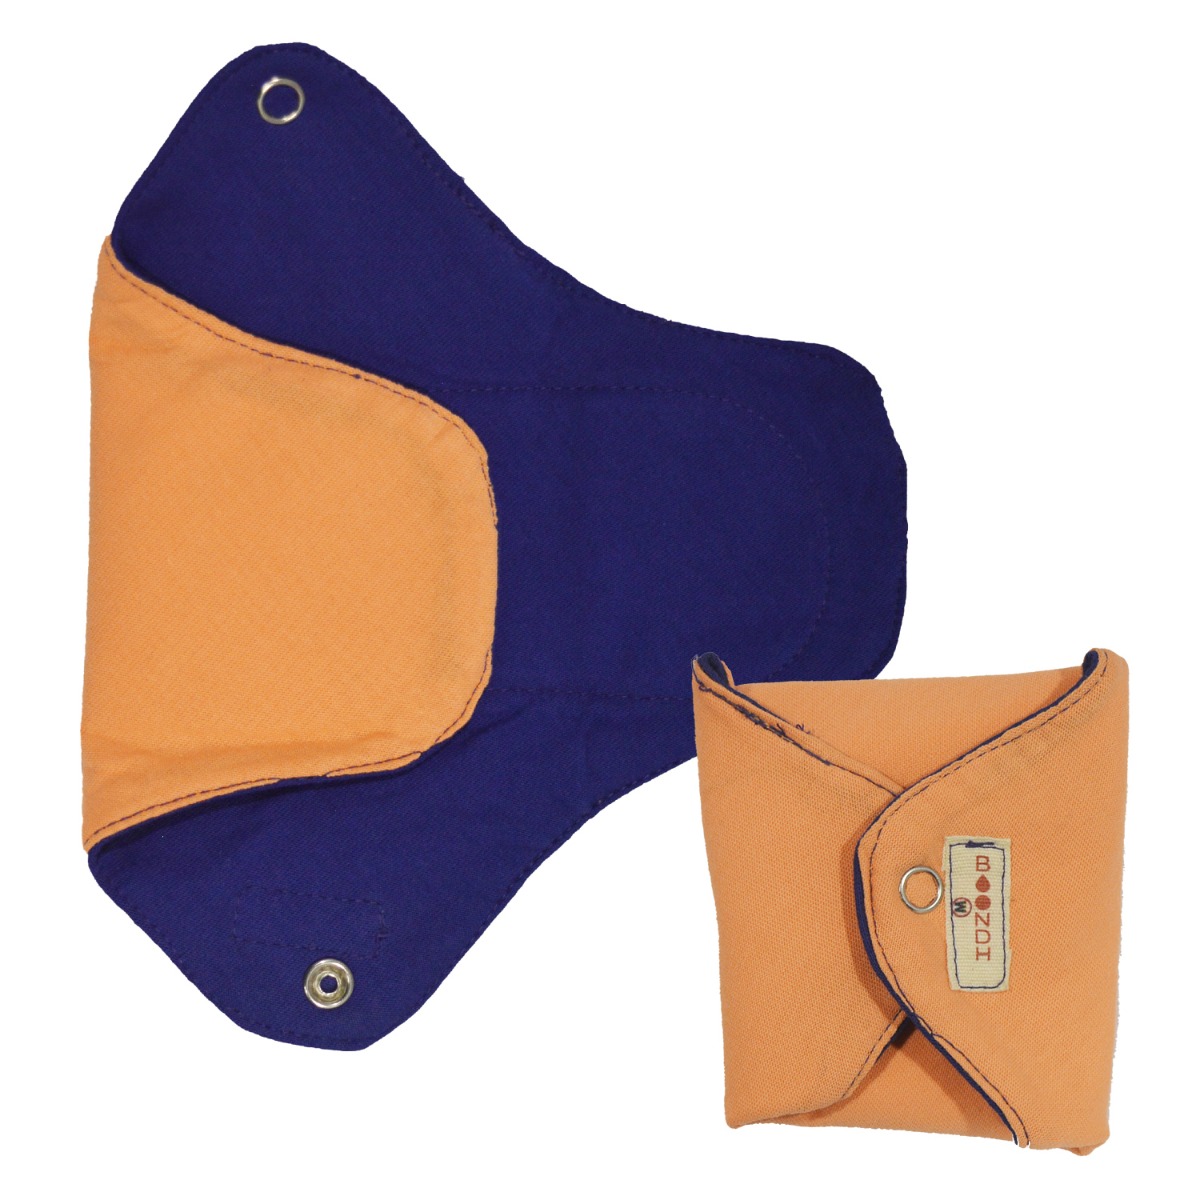 Boondh Cloth Pad: Medium Size - Midnight Blue